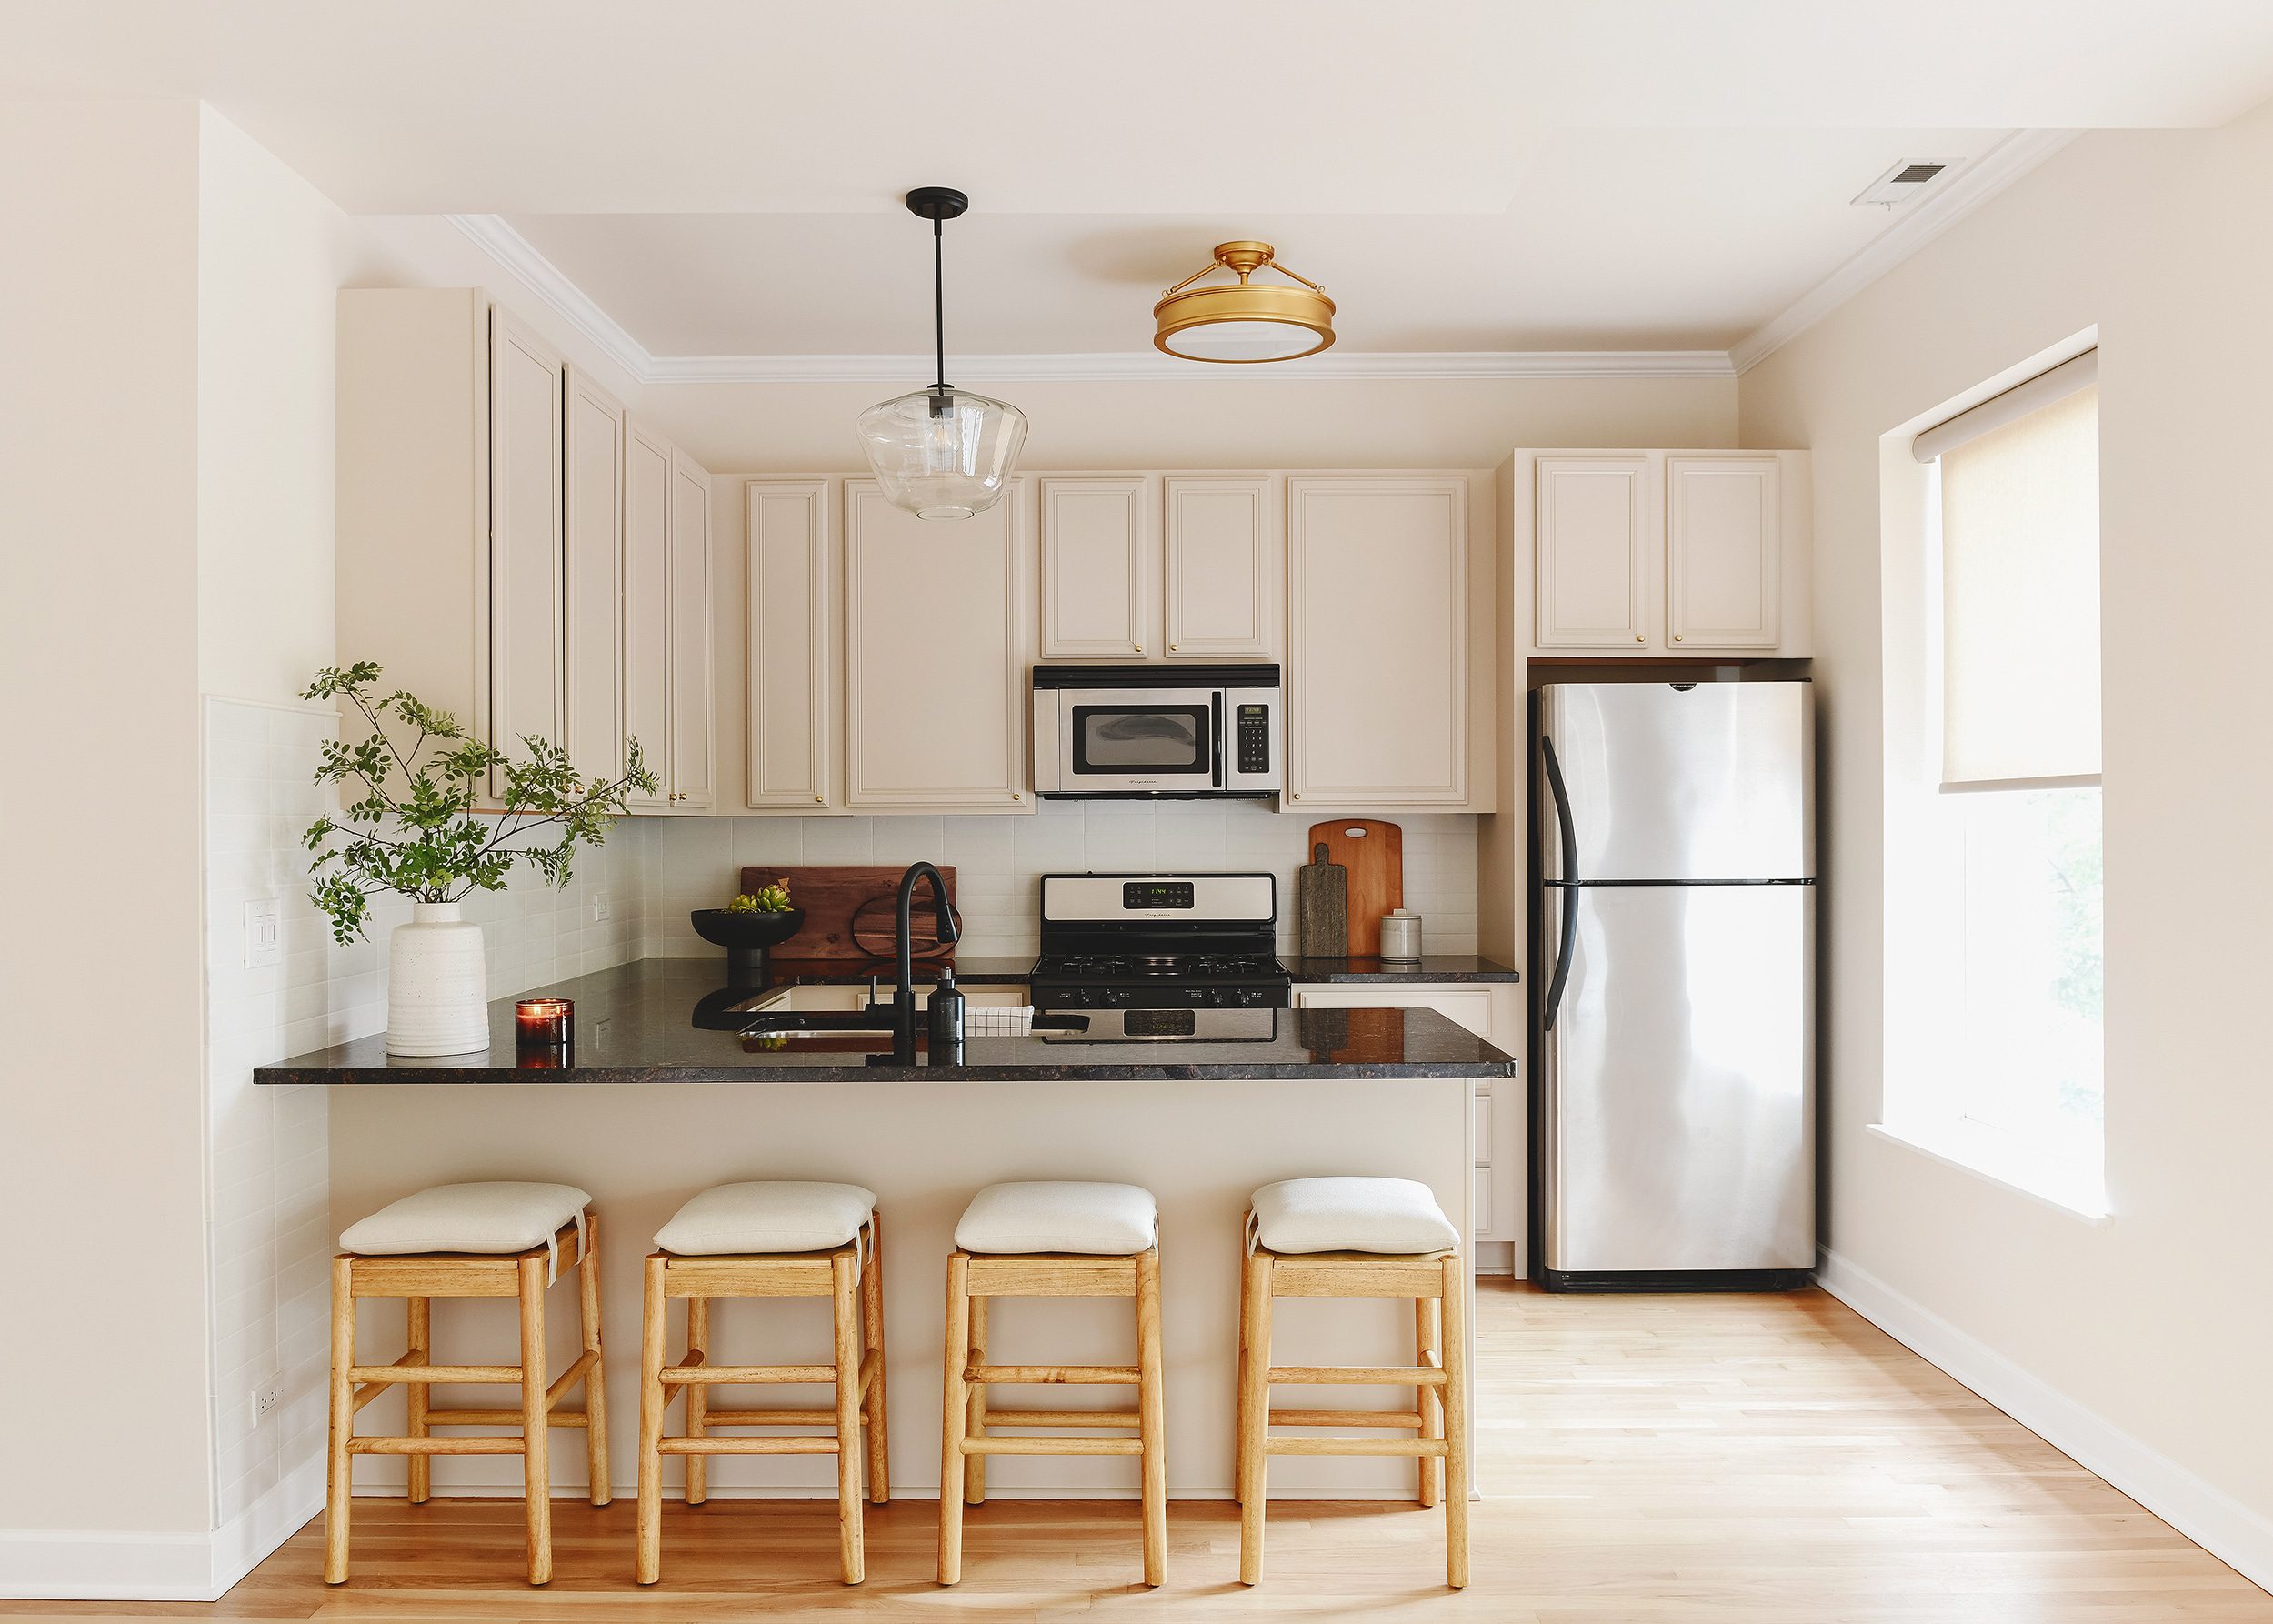 neutral kitchen design | small space kitchen ideas | via Yellow Brick Home